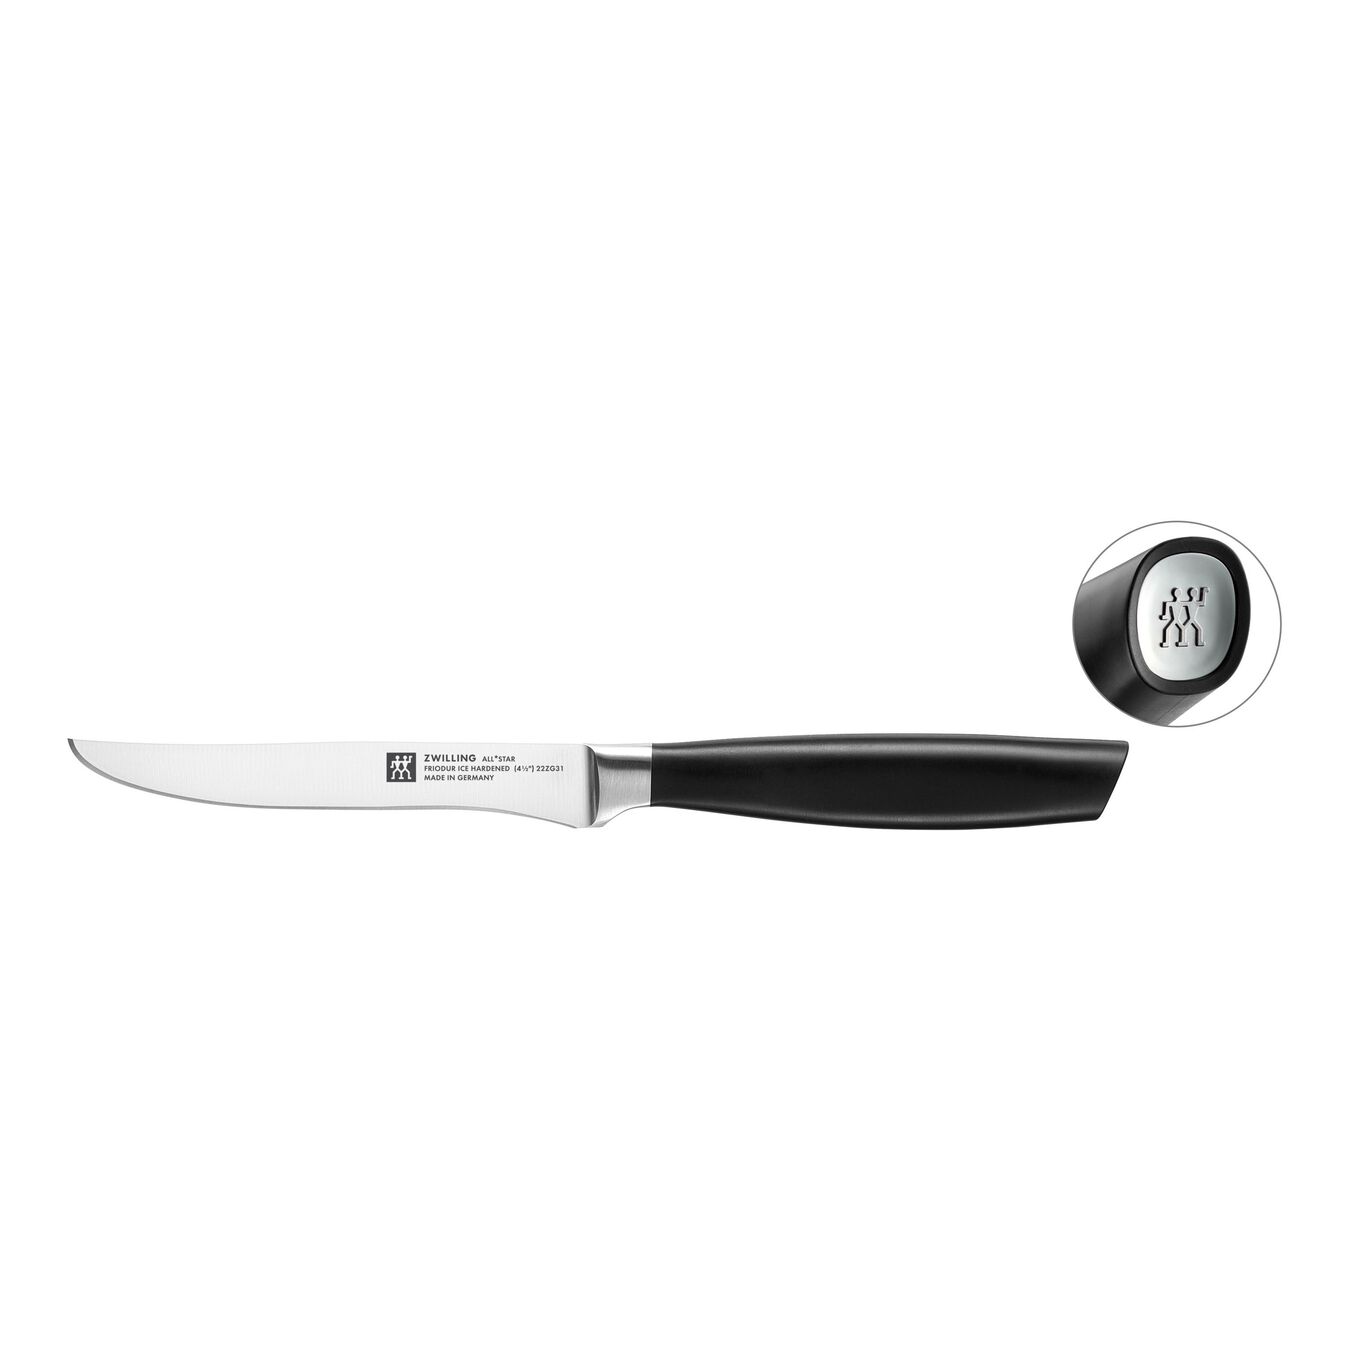 12 cm Steak knife, silver,,large 1